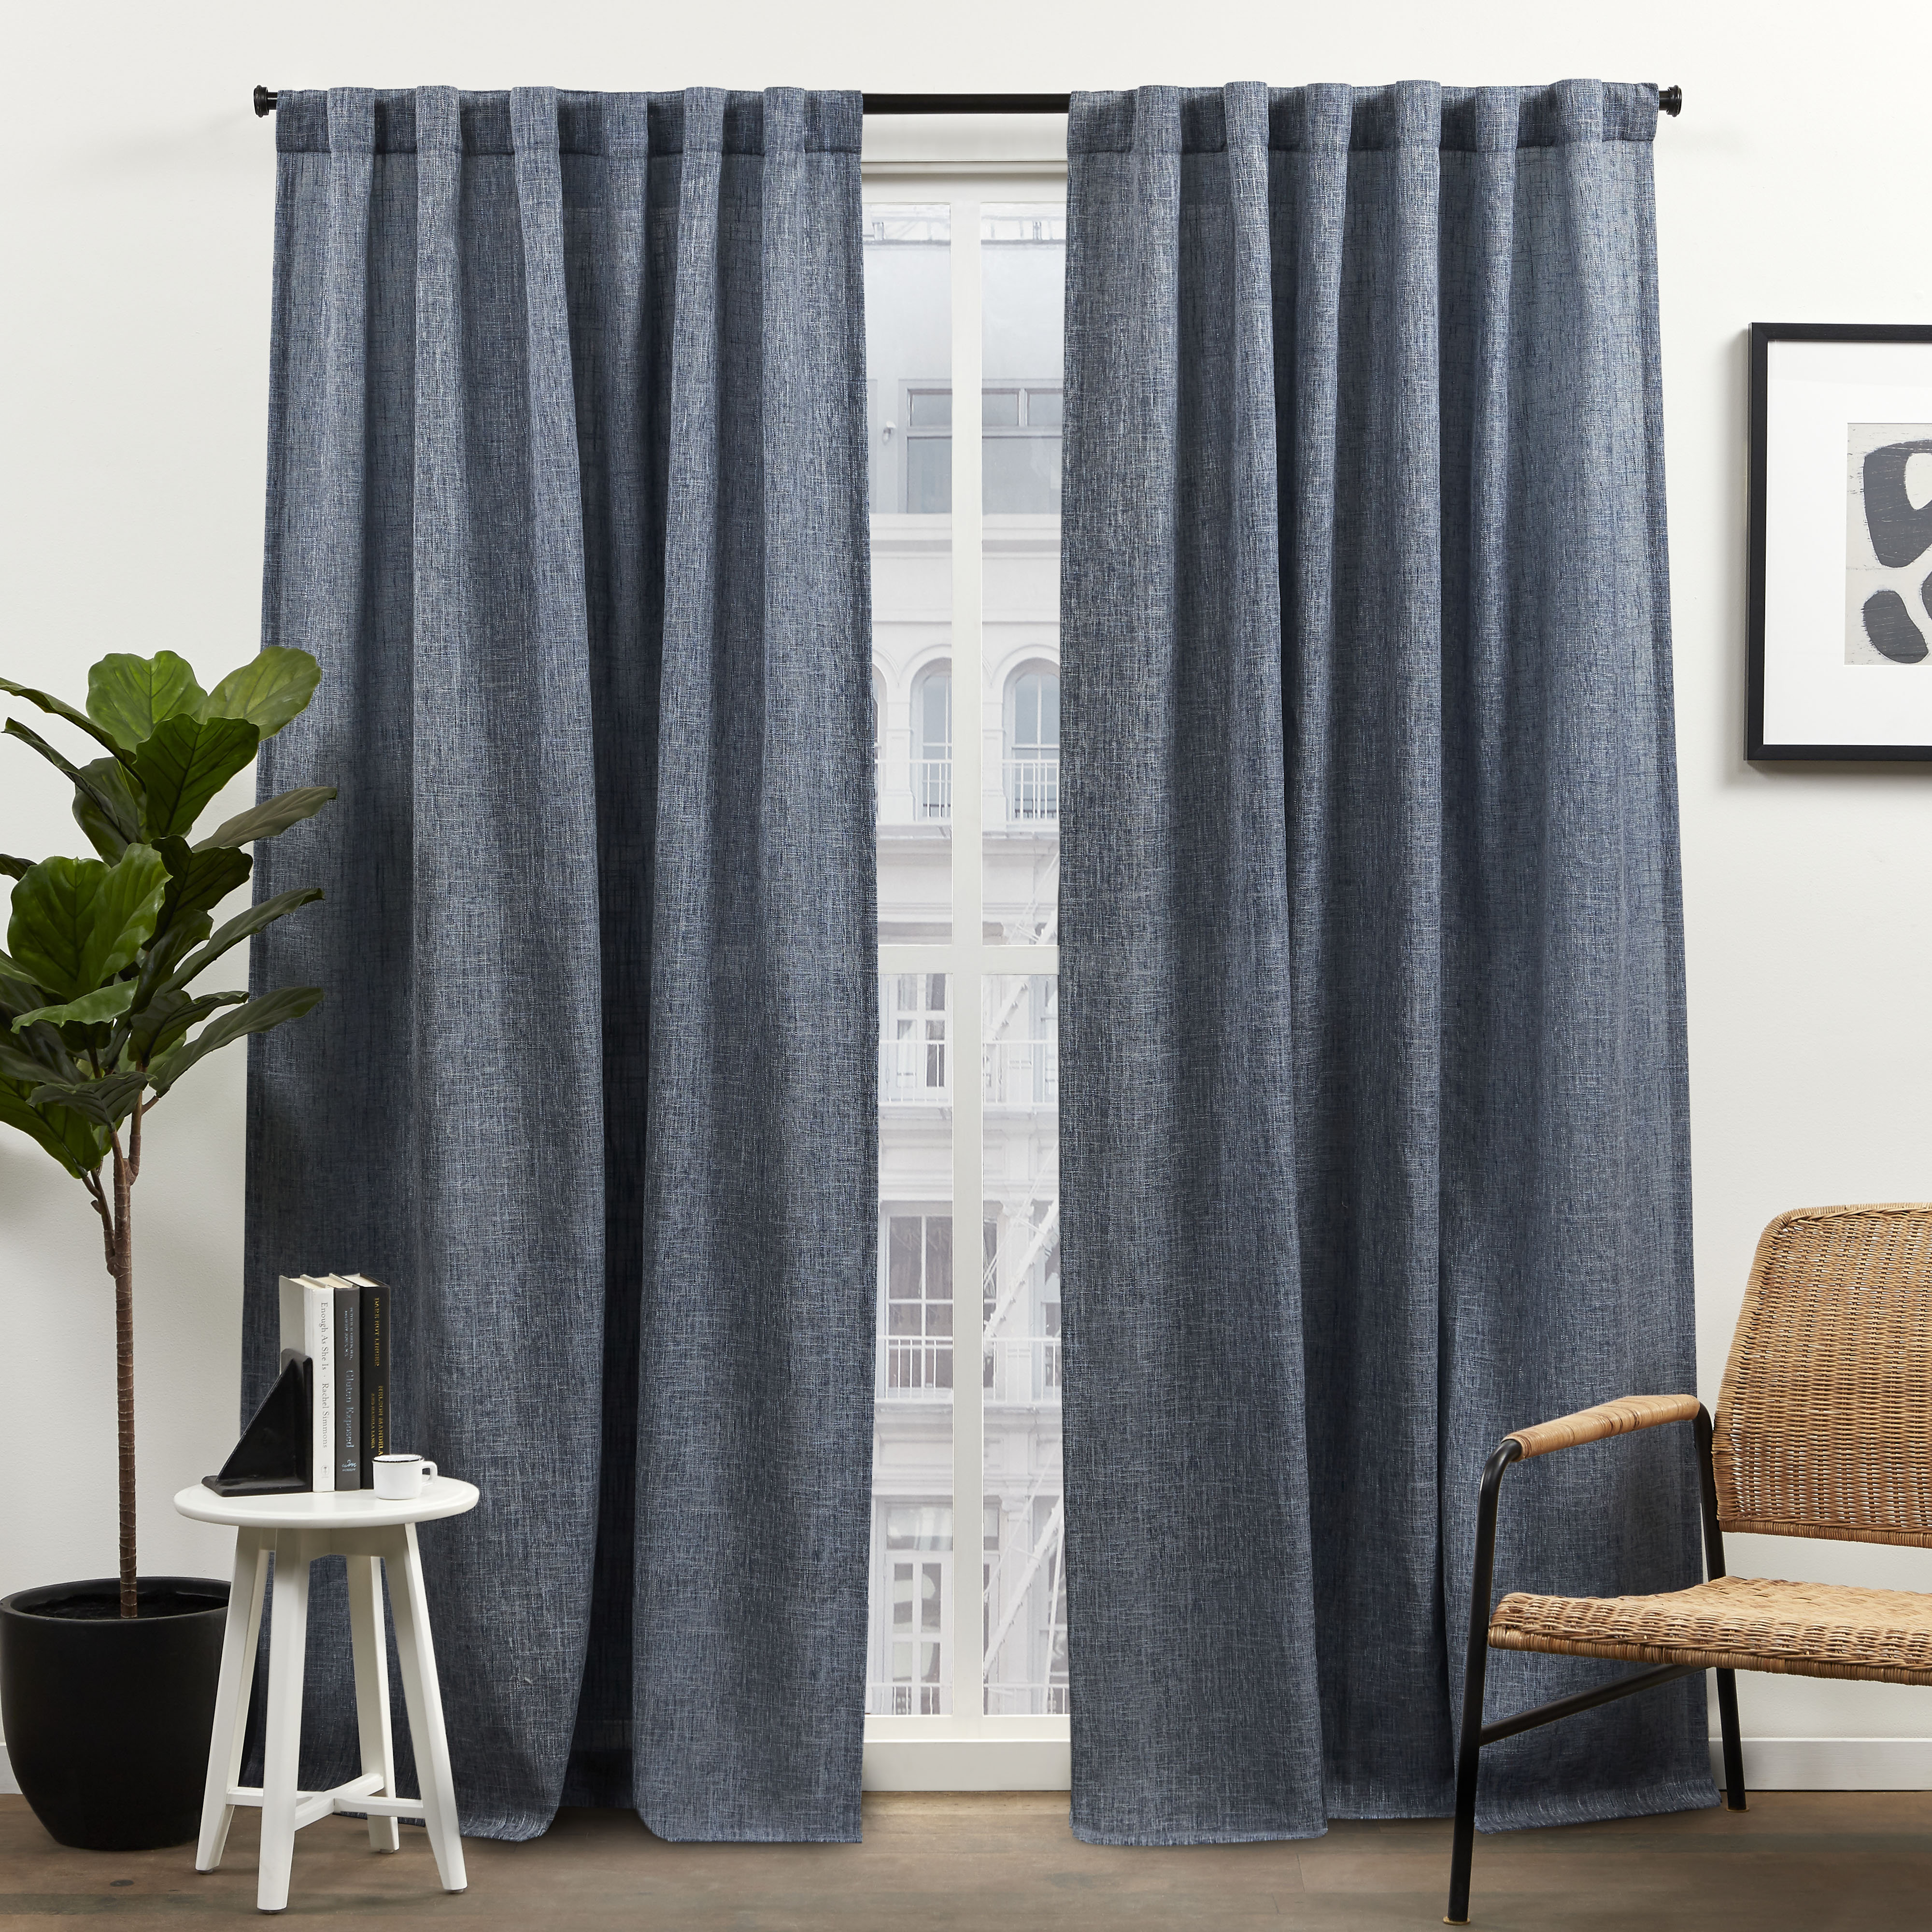 Amalgamated Textiles Exclusive Home Solid Semi Sheer Tab Top Curtain Panels Reviews Wayfair